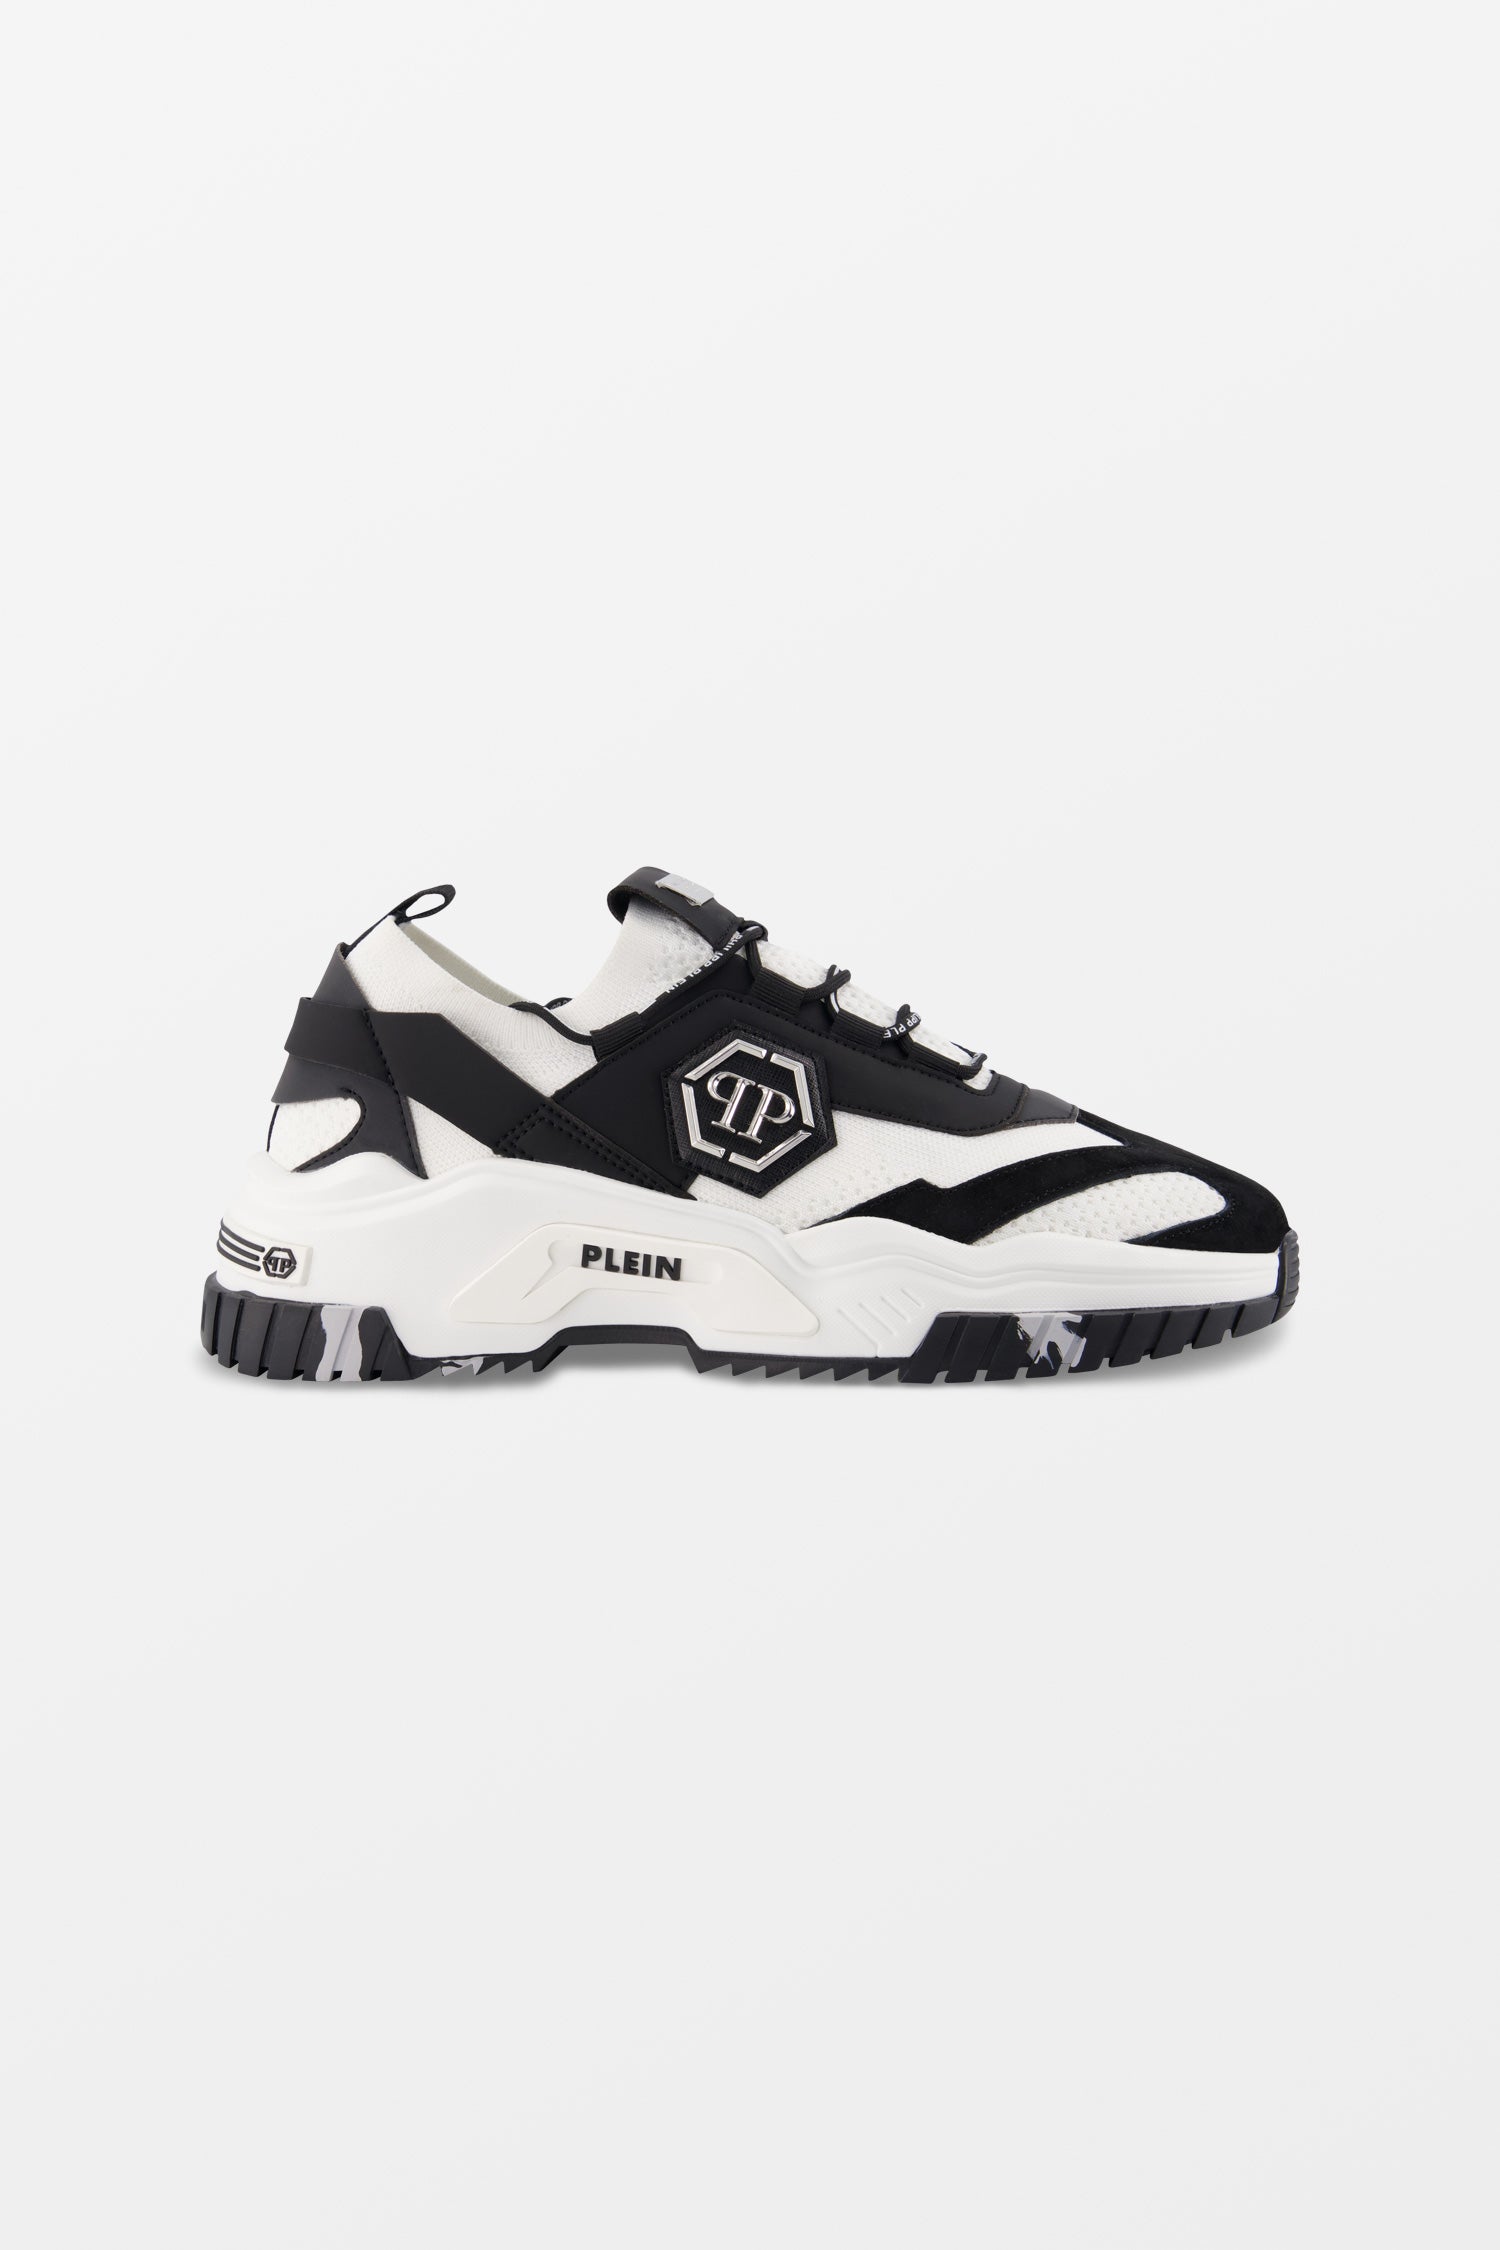 Philipp Plein Black & White Trainer Predator Sneakers